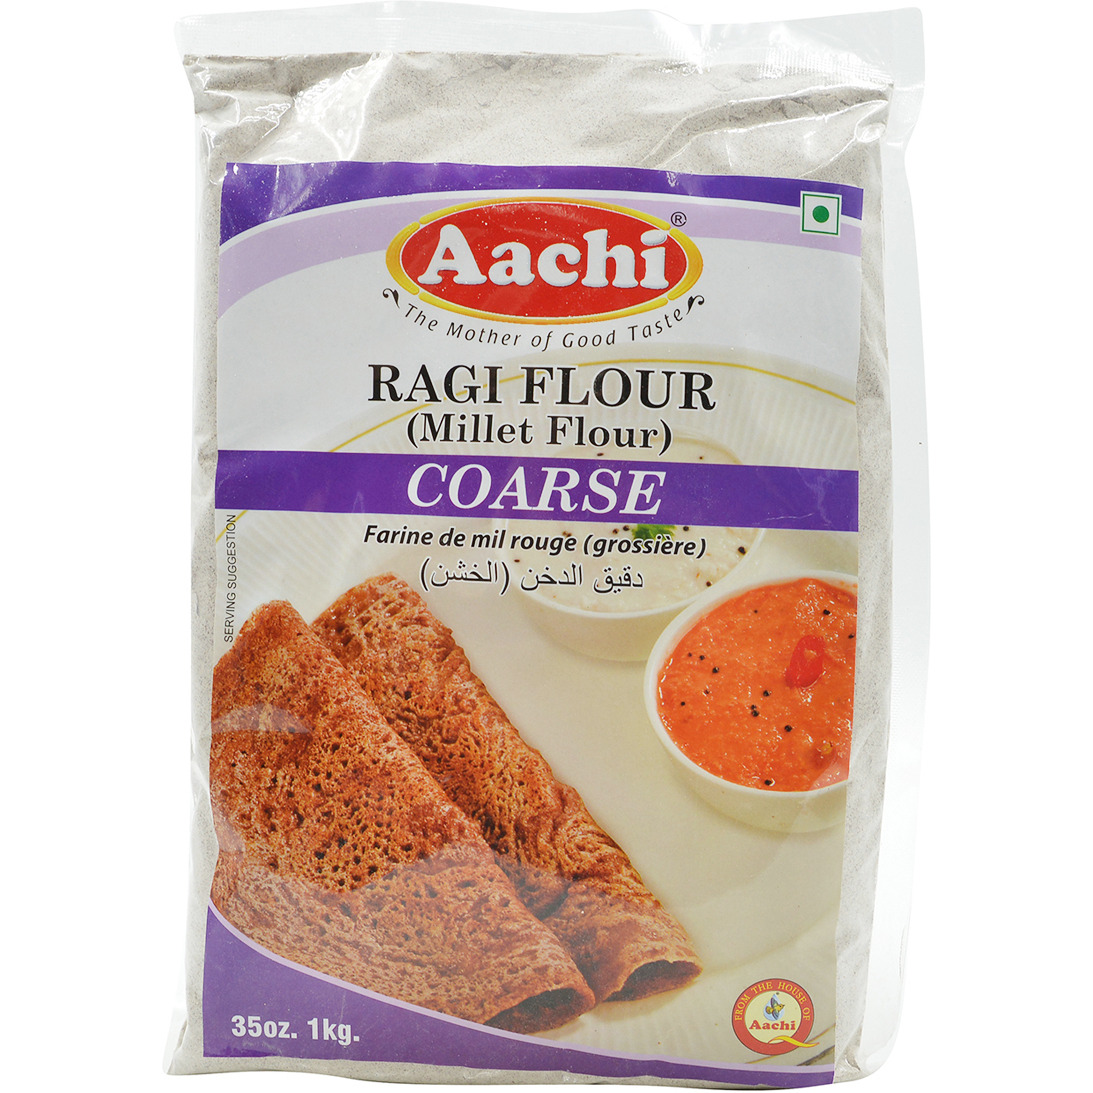 Aachi Ragi Flour Coarse - 1 Kg (2.2 Lb)